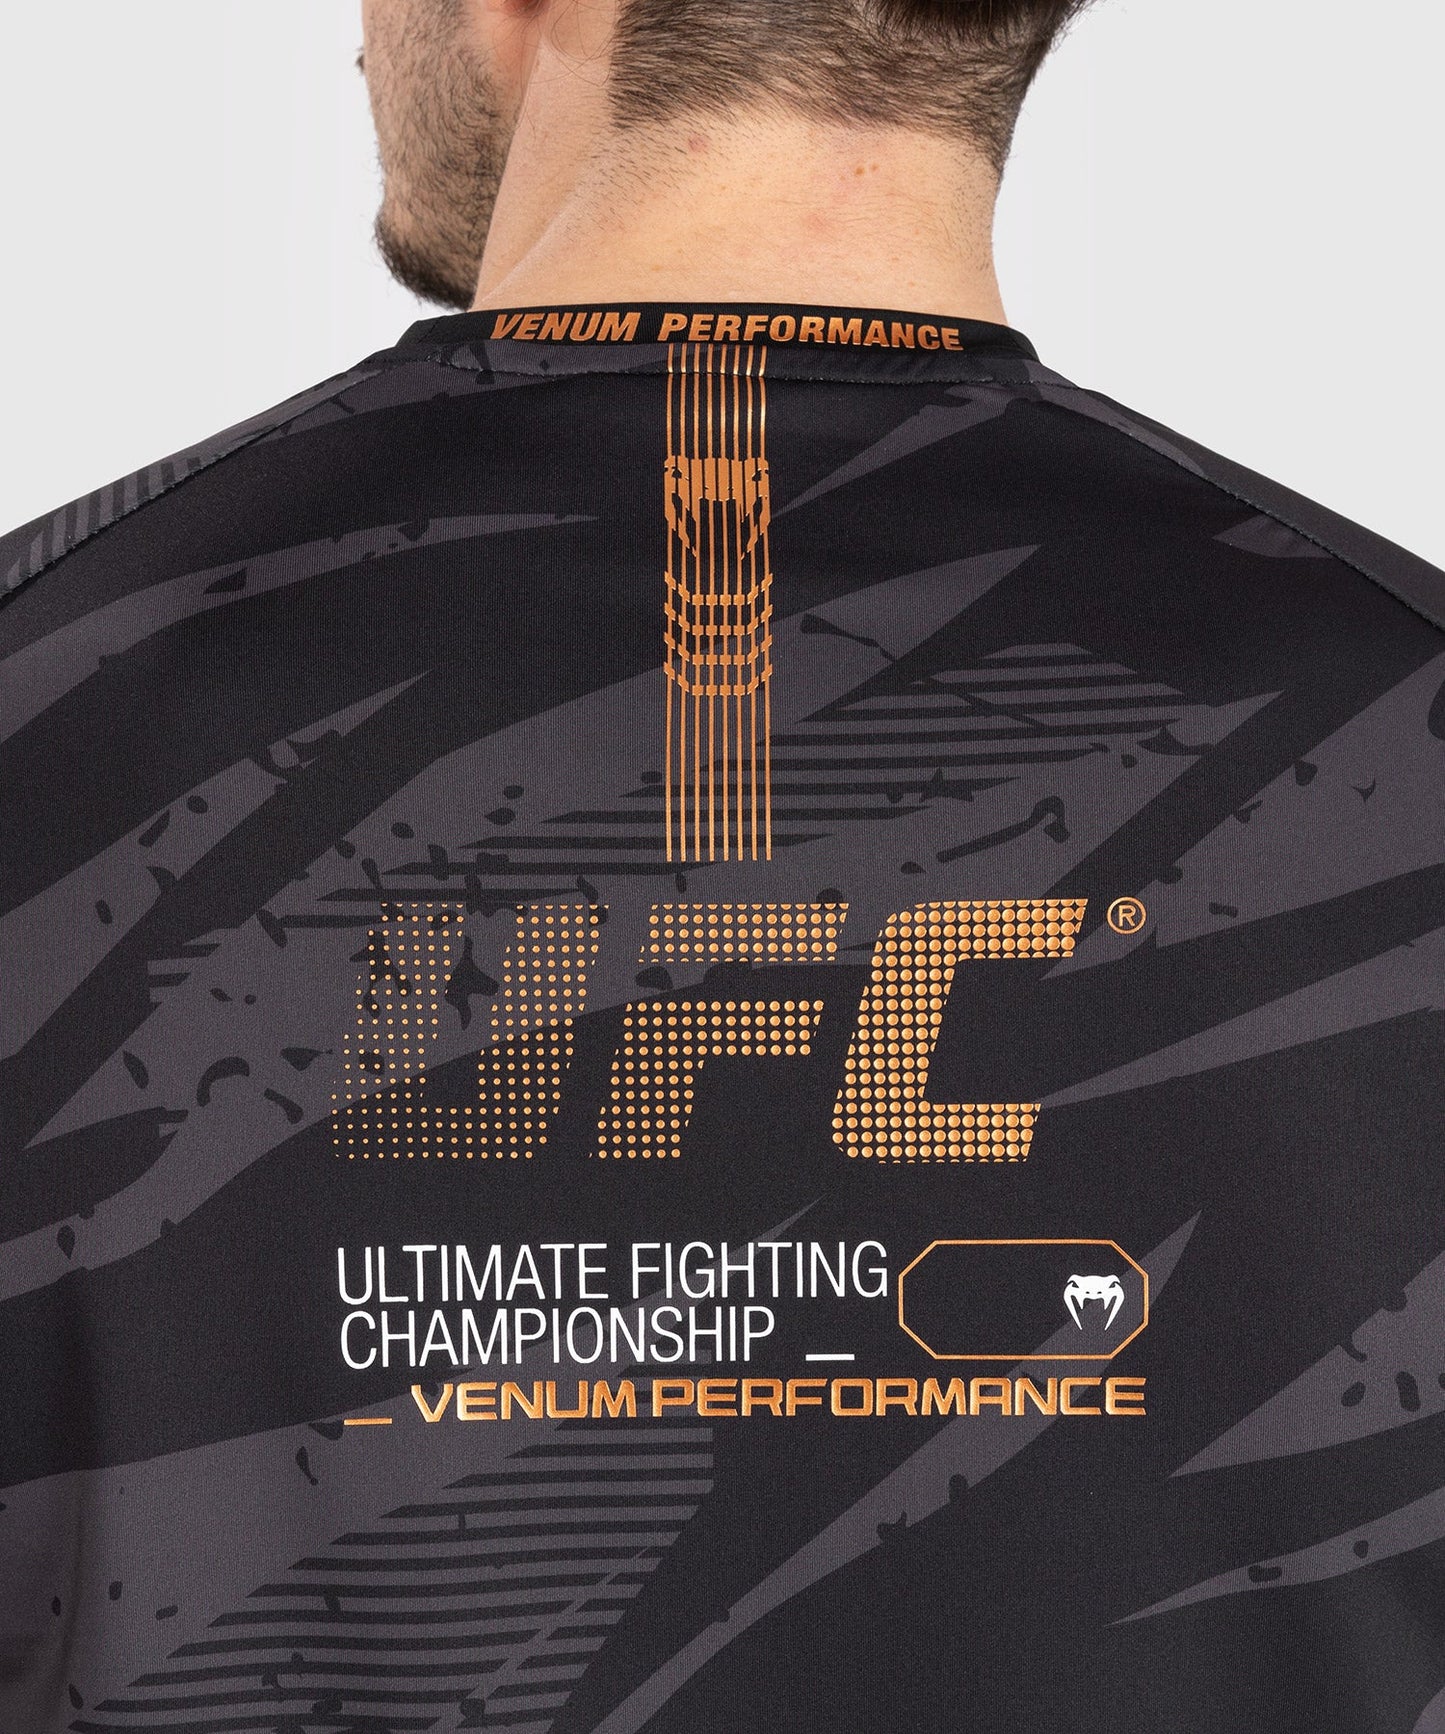 UFC Adrenaline by Venum Fight Week Maglietta Dry Tech da Uomo - Urban Camo